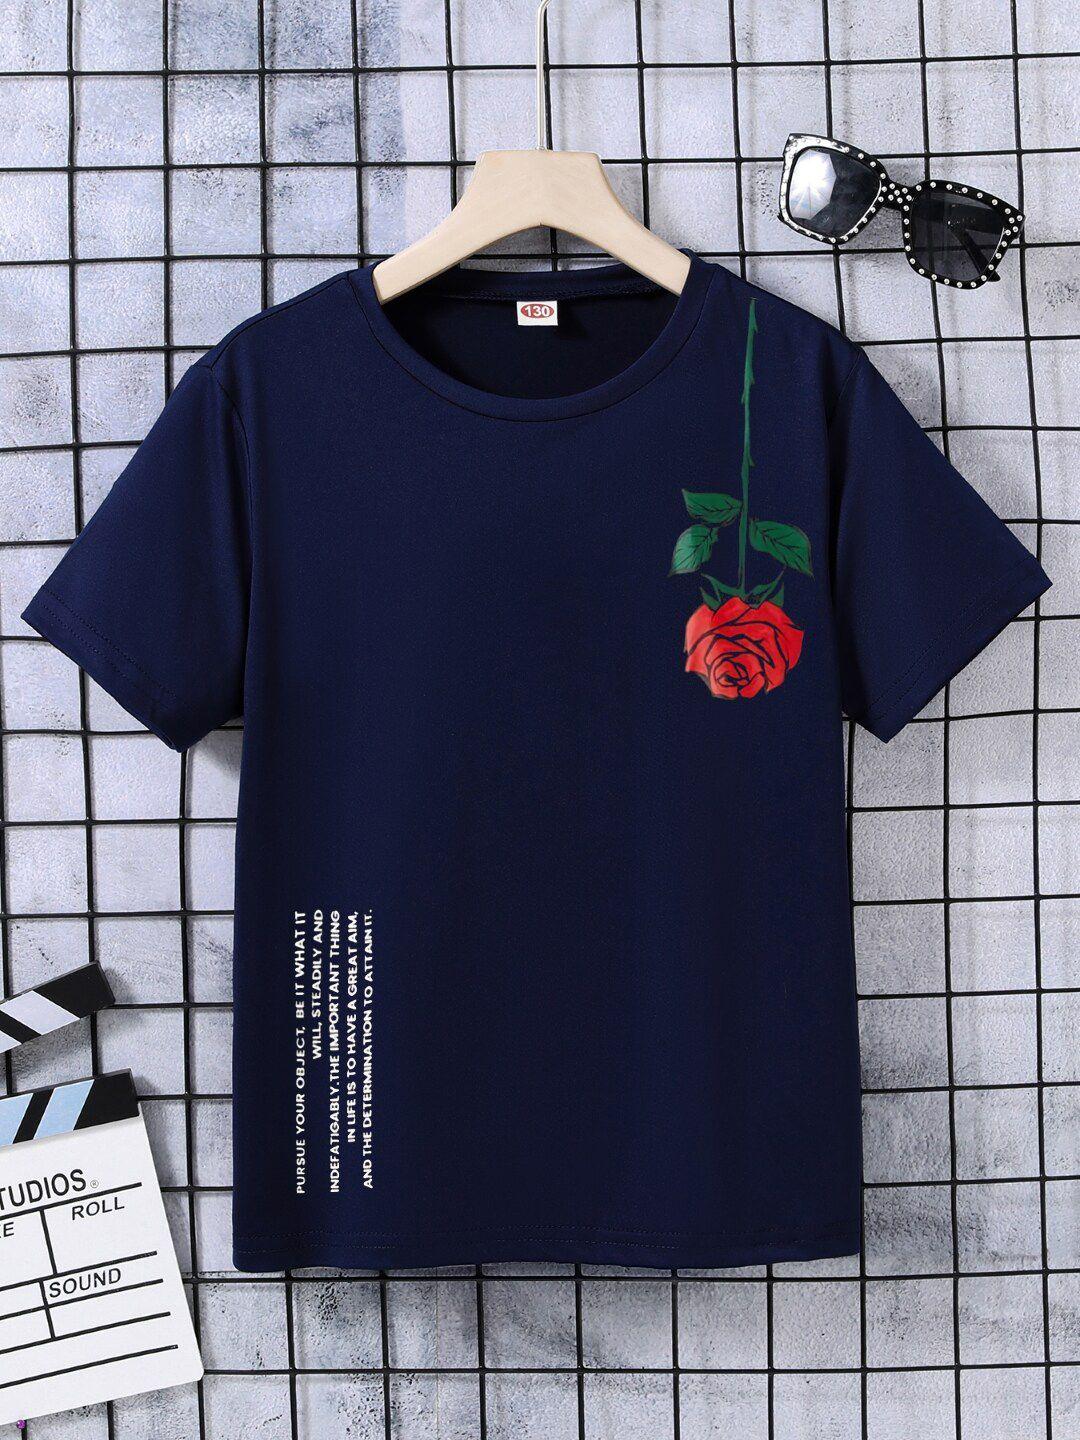 stylecast boys navy blue floral printed regular fit t-shirt